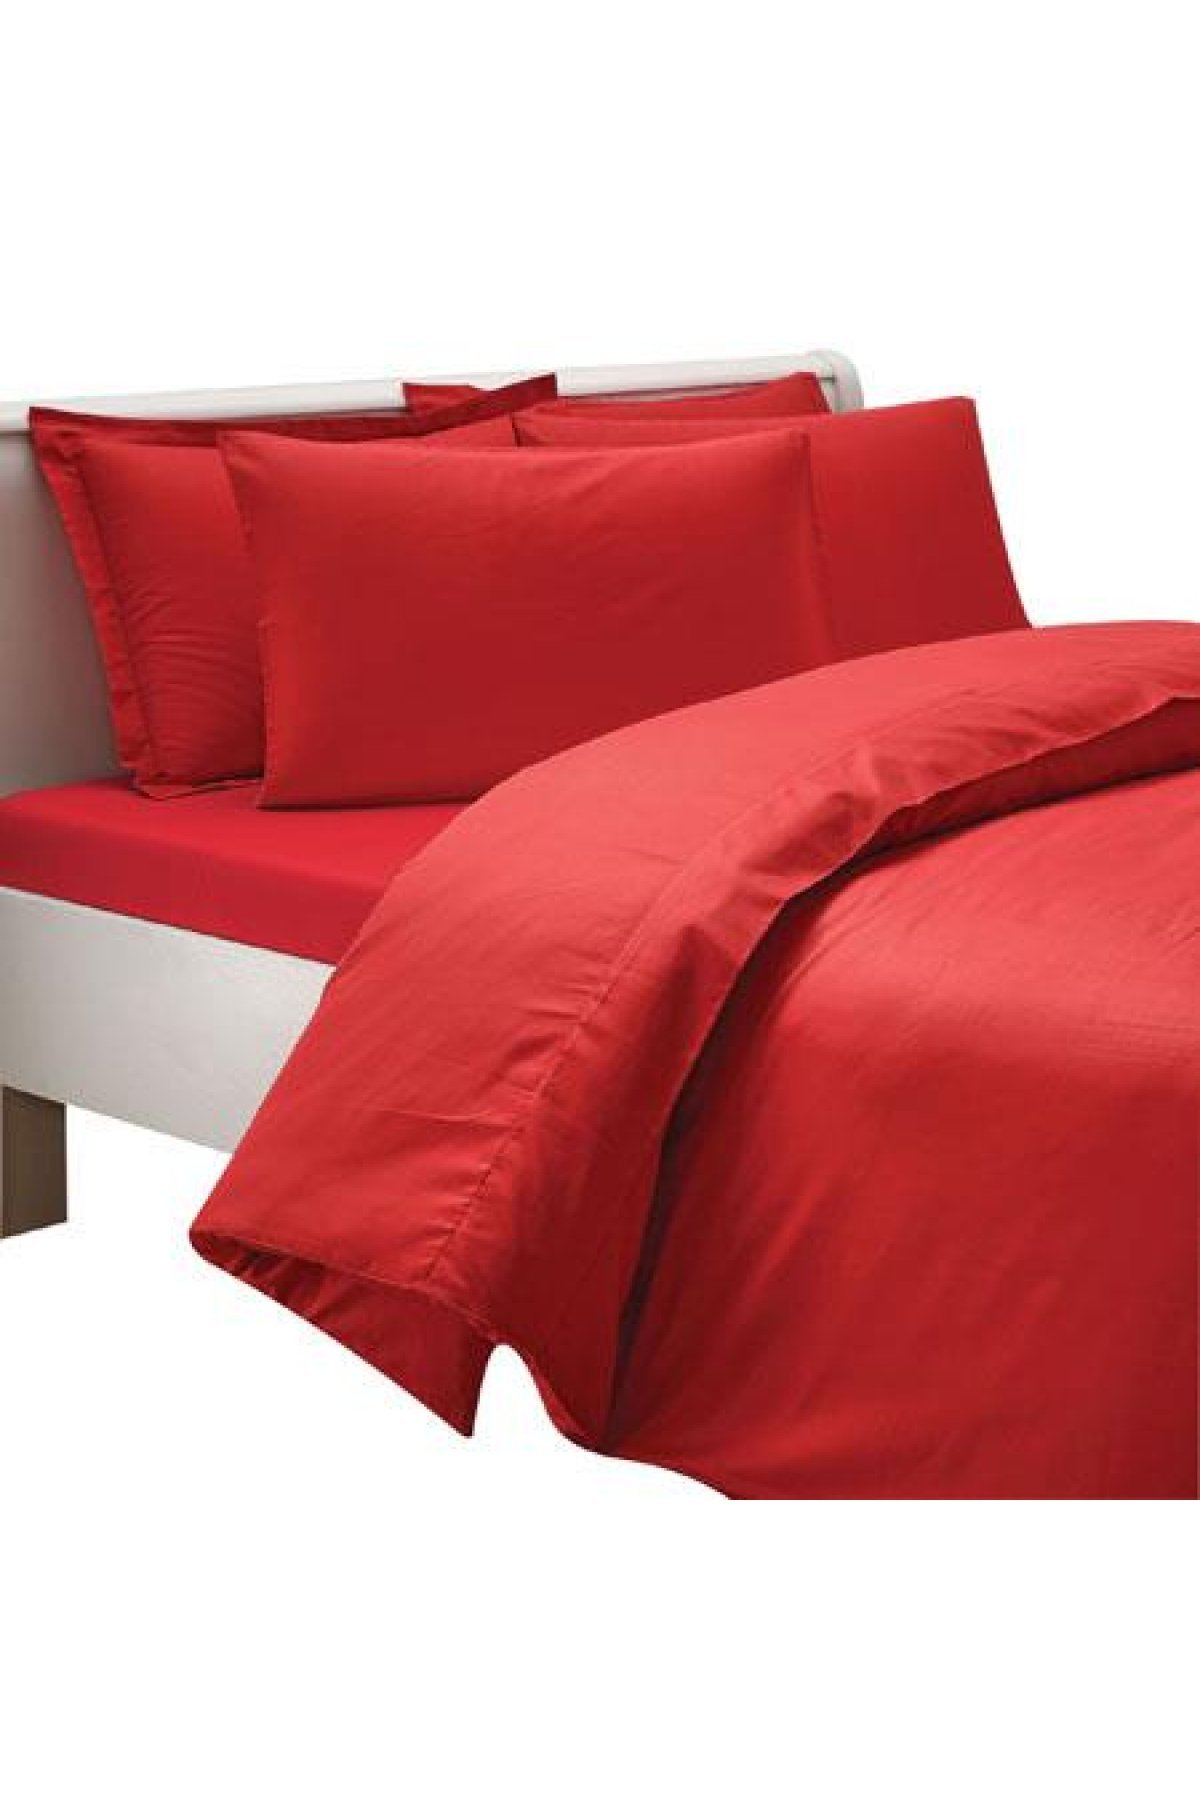 Bedding-Red